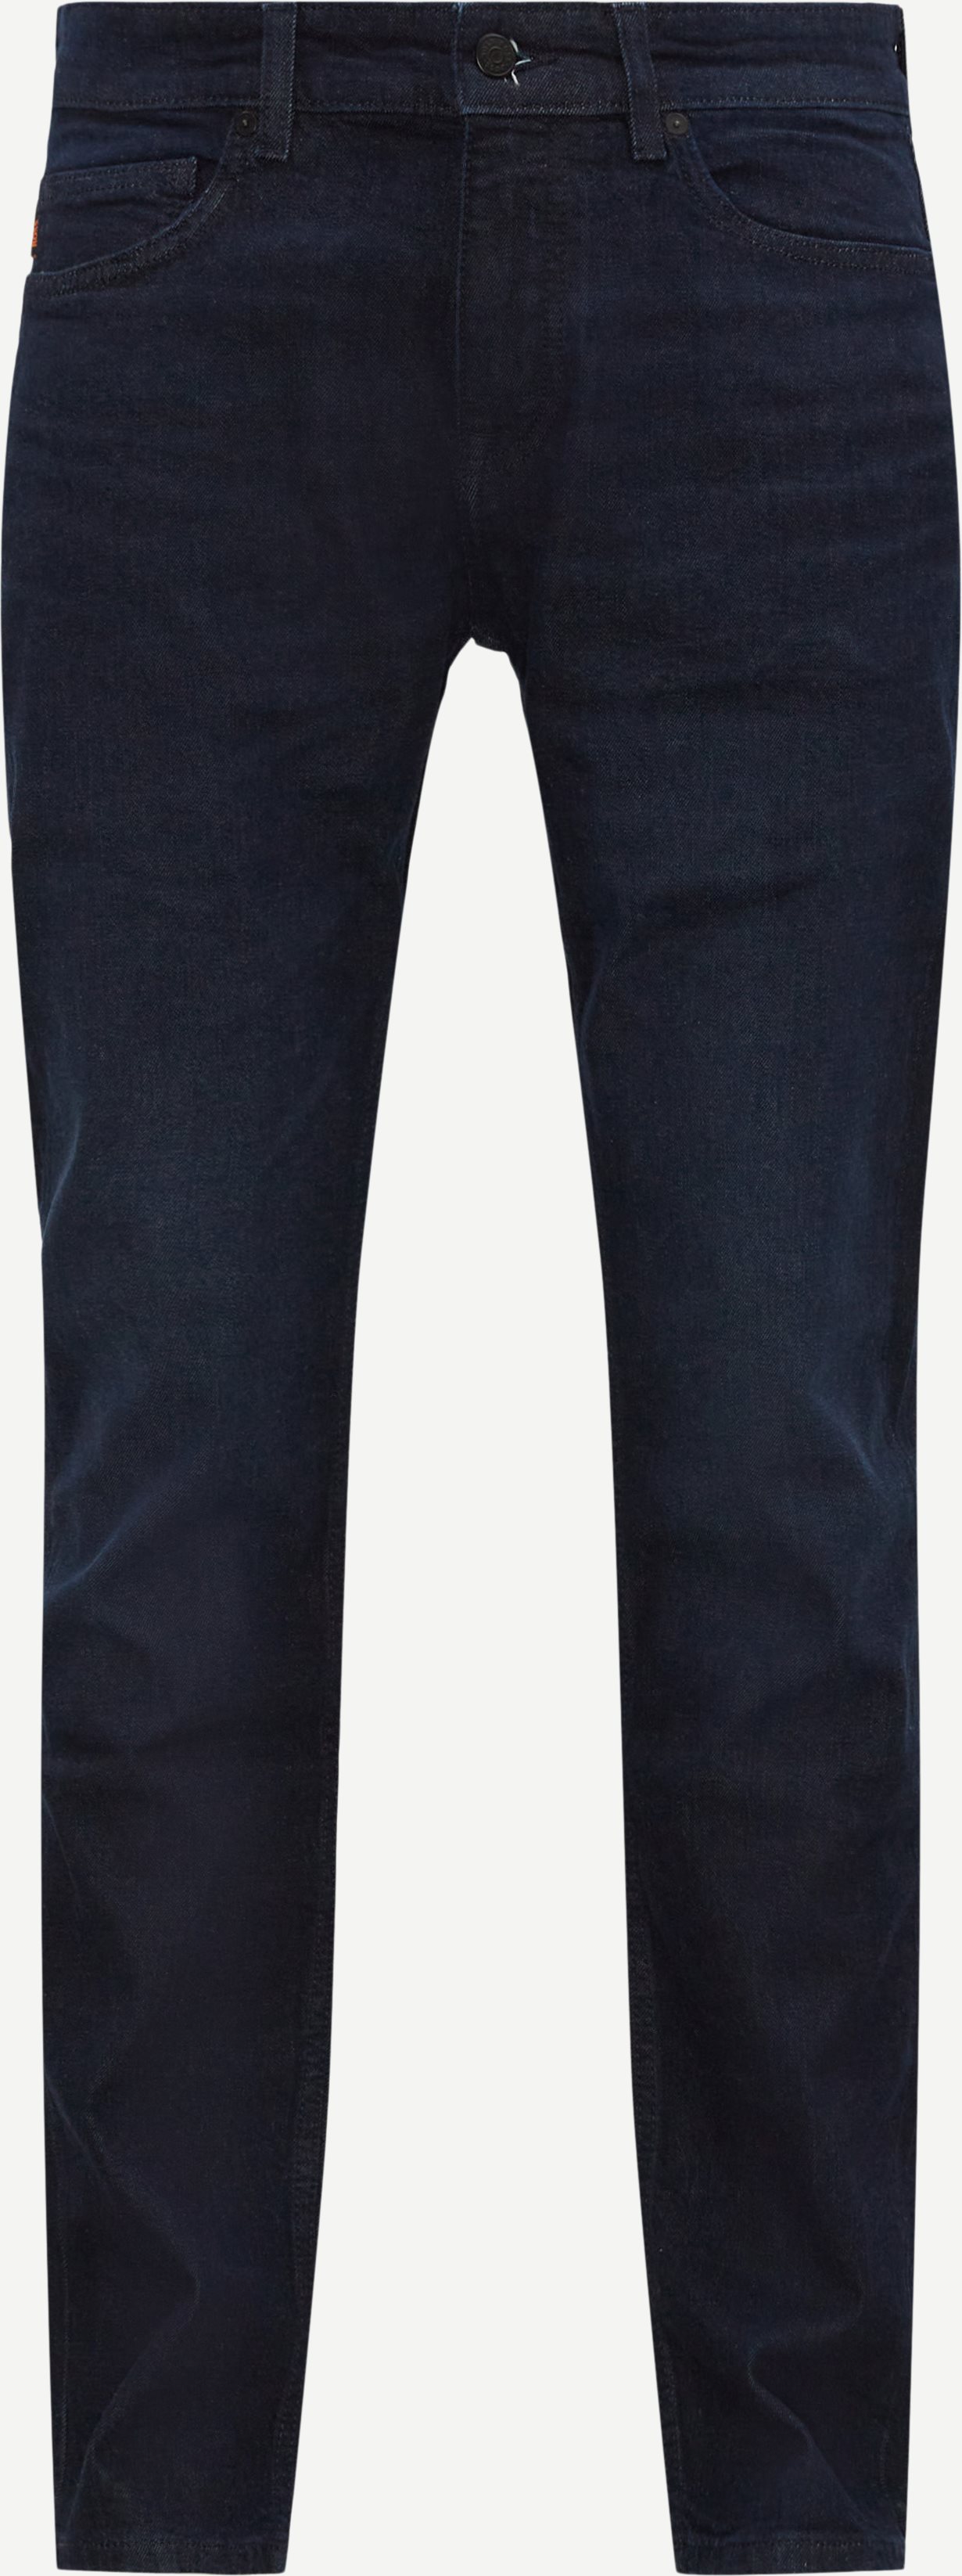 BOSS Casual Jeans 6340 DELAWARE Denim